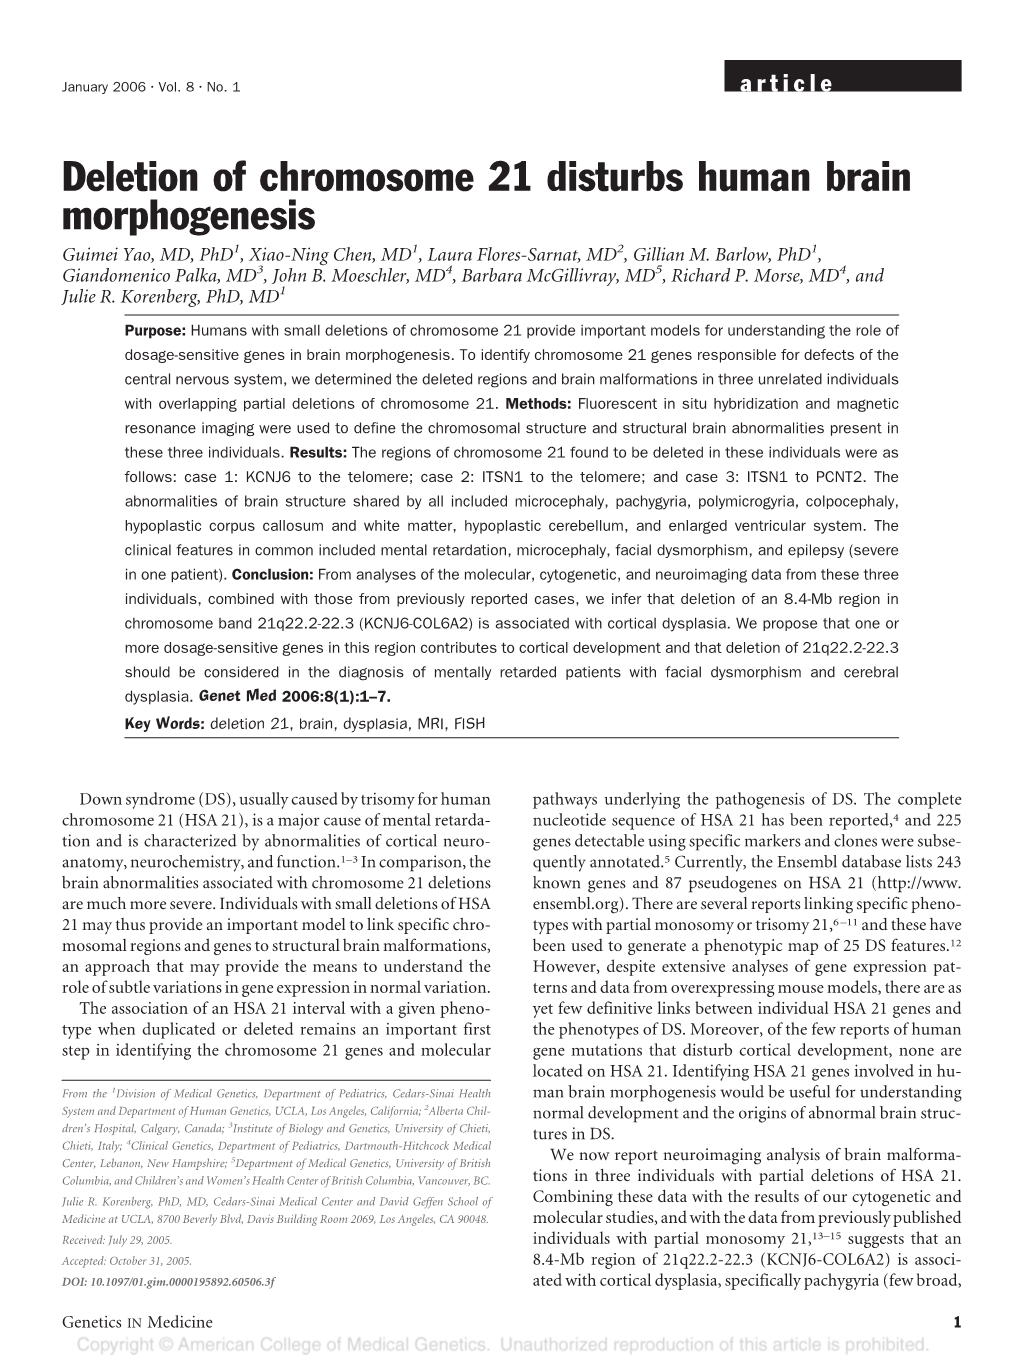 Deletion of Chromosome 21 Disturbs Human Brain Morphogenesis Guimei Yao, MD, Phd1, Xiao-Ning Chen, MD1, Laura Flores-Sarnat, MD2, Gillian M